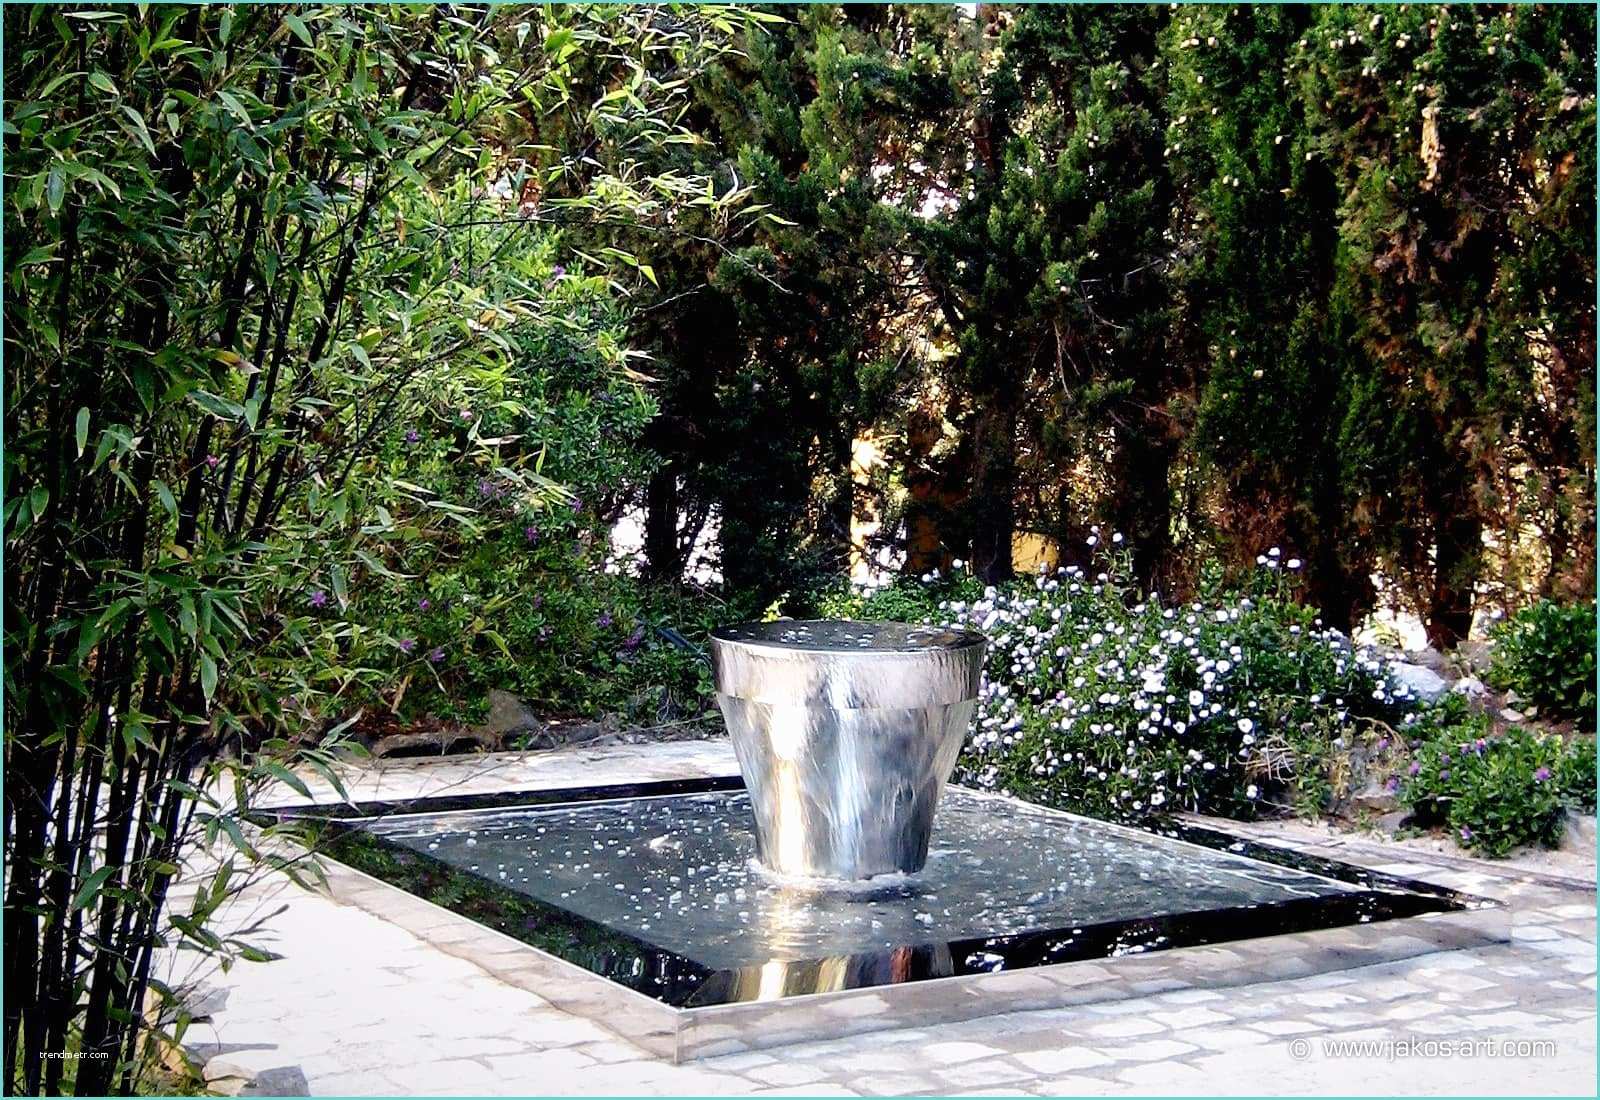 Vasque Extrieure Pour Jardin Stunning Vasque Pour Fontaine Jardin Ideas Awesome